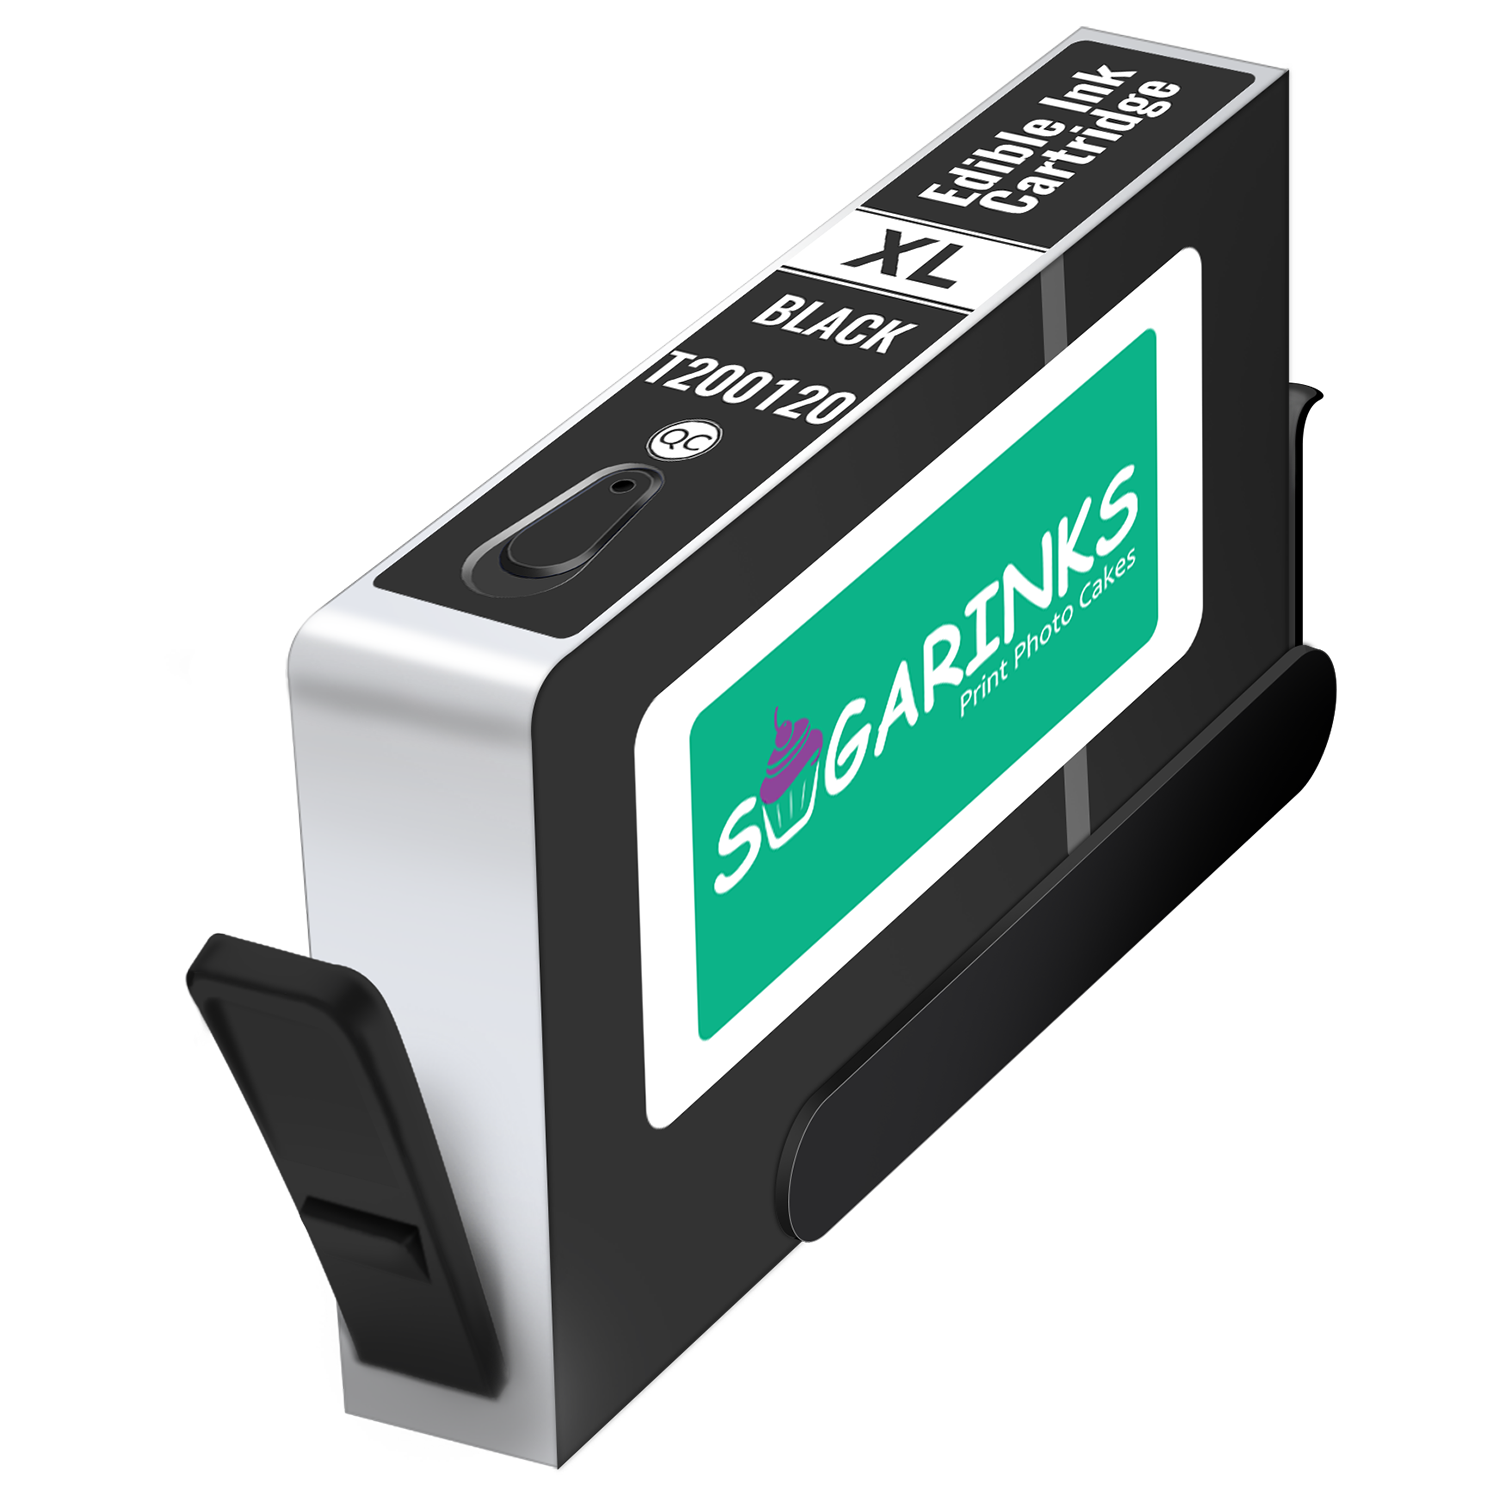 Sugarinks Edible Ink Cartridges T200120 for Epson Edible Printers – Black